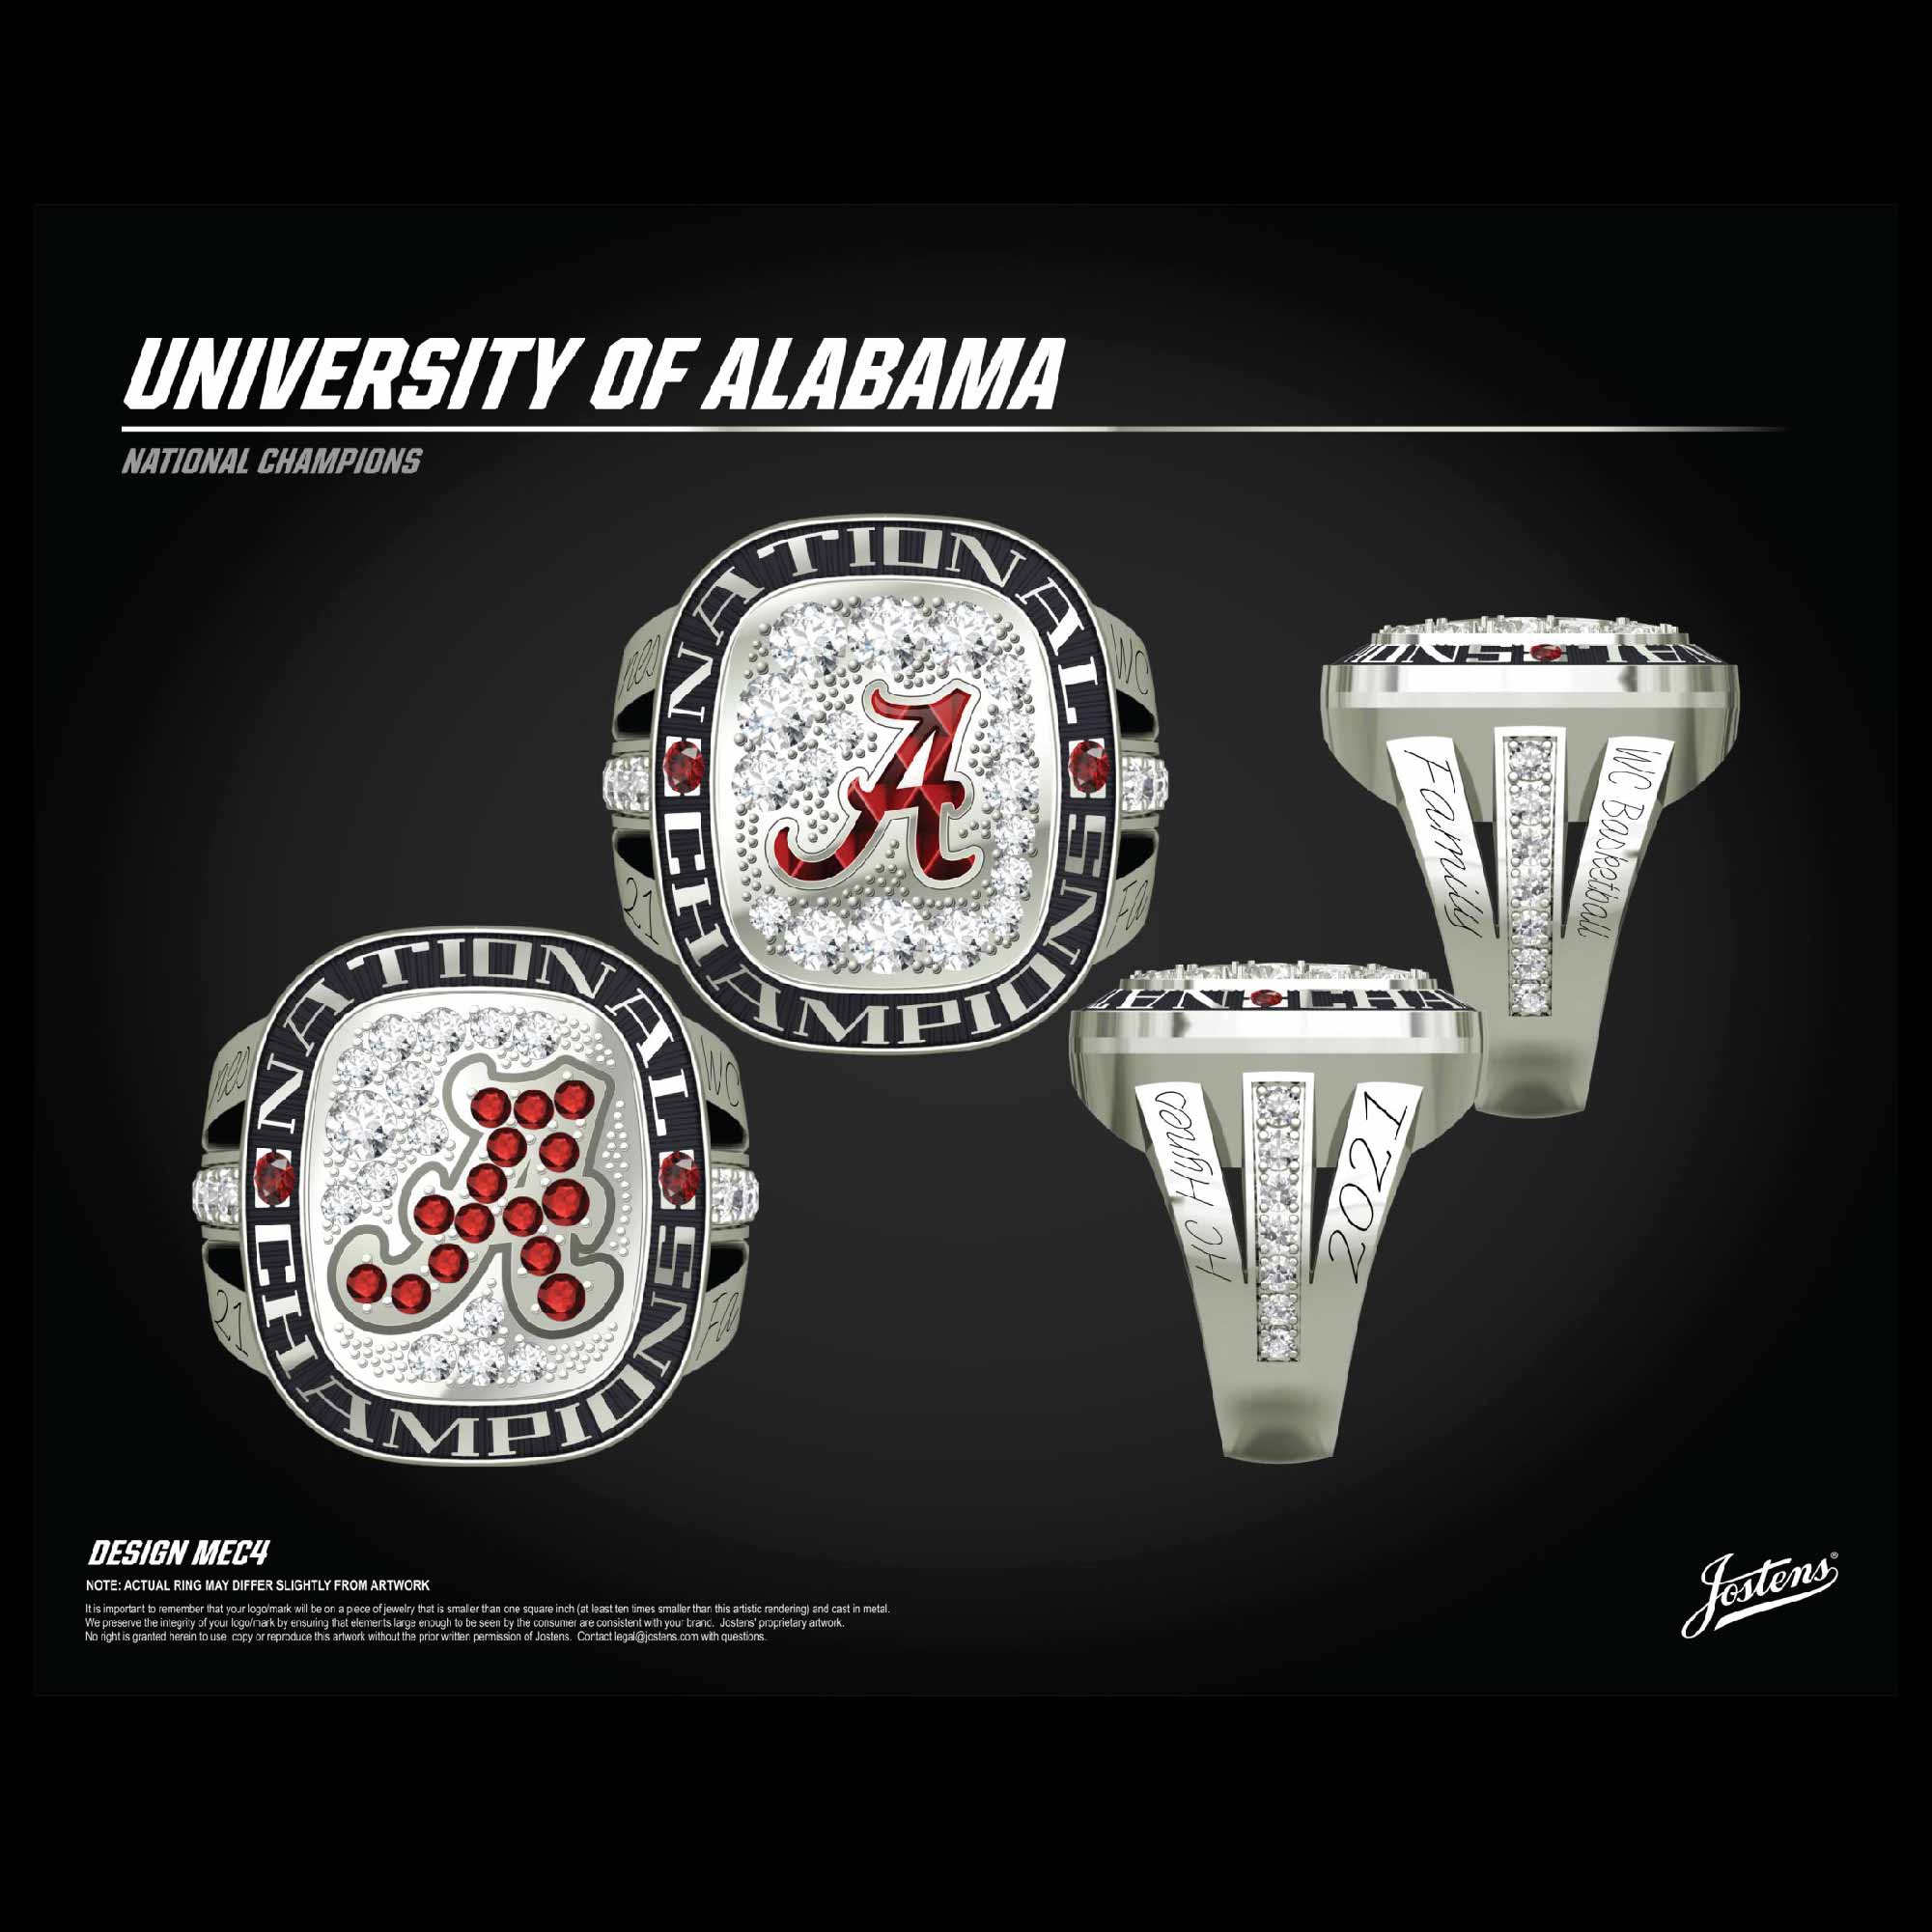 University of Alabama Women's Basketball 2021 National Championship Ring